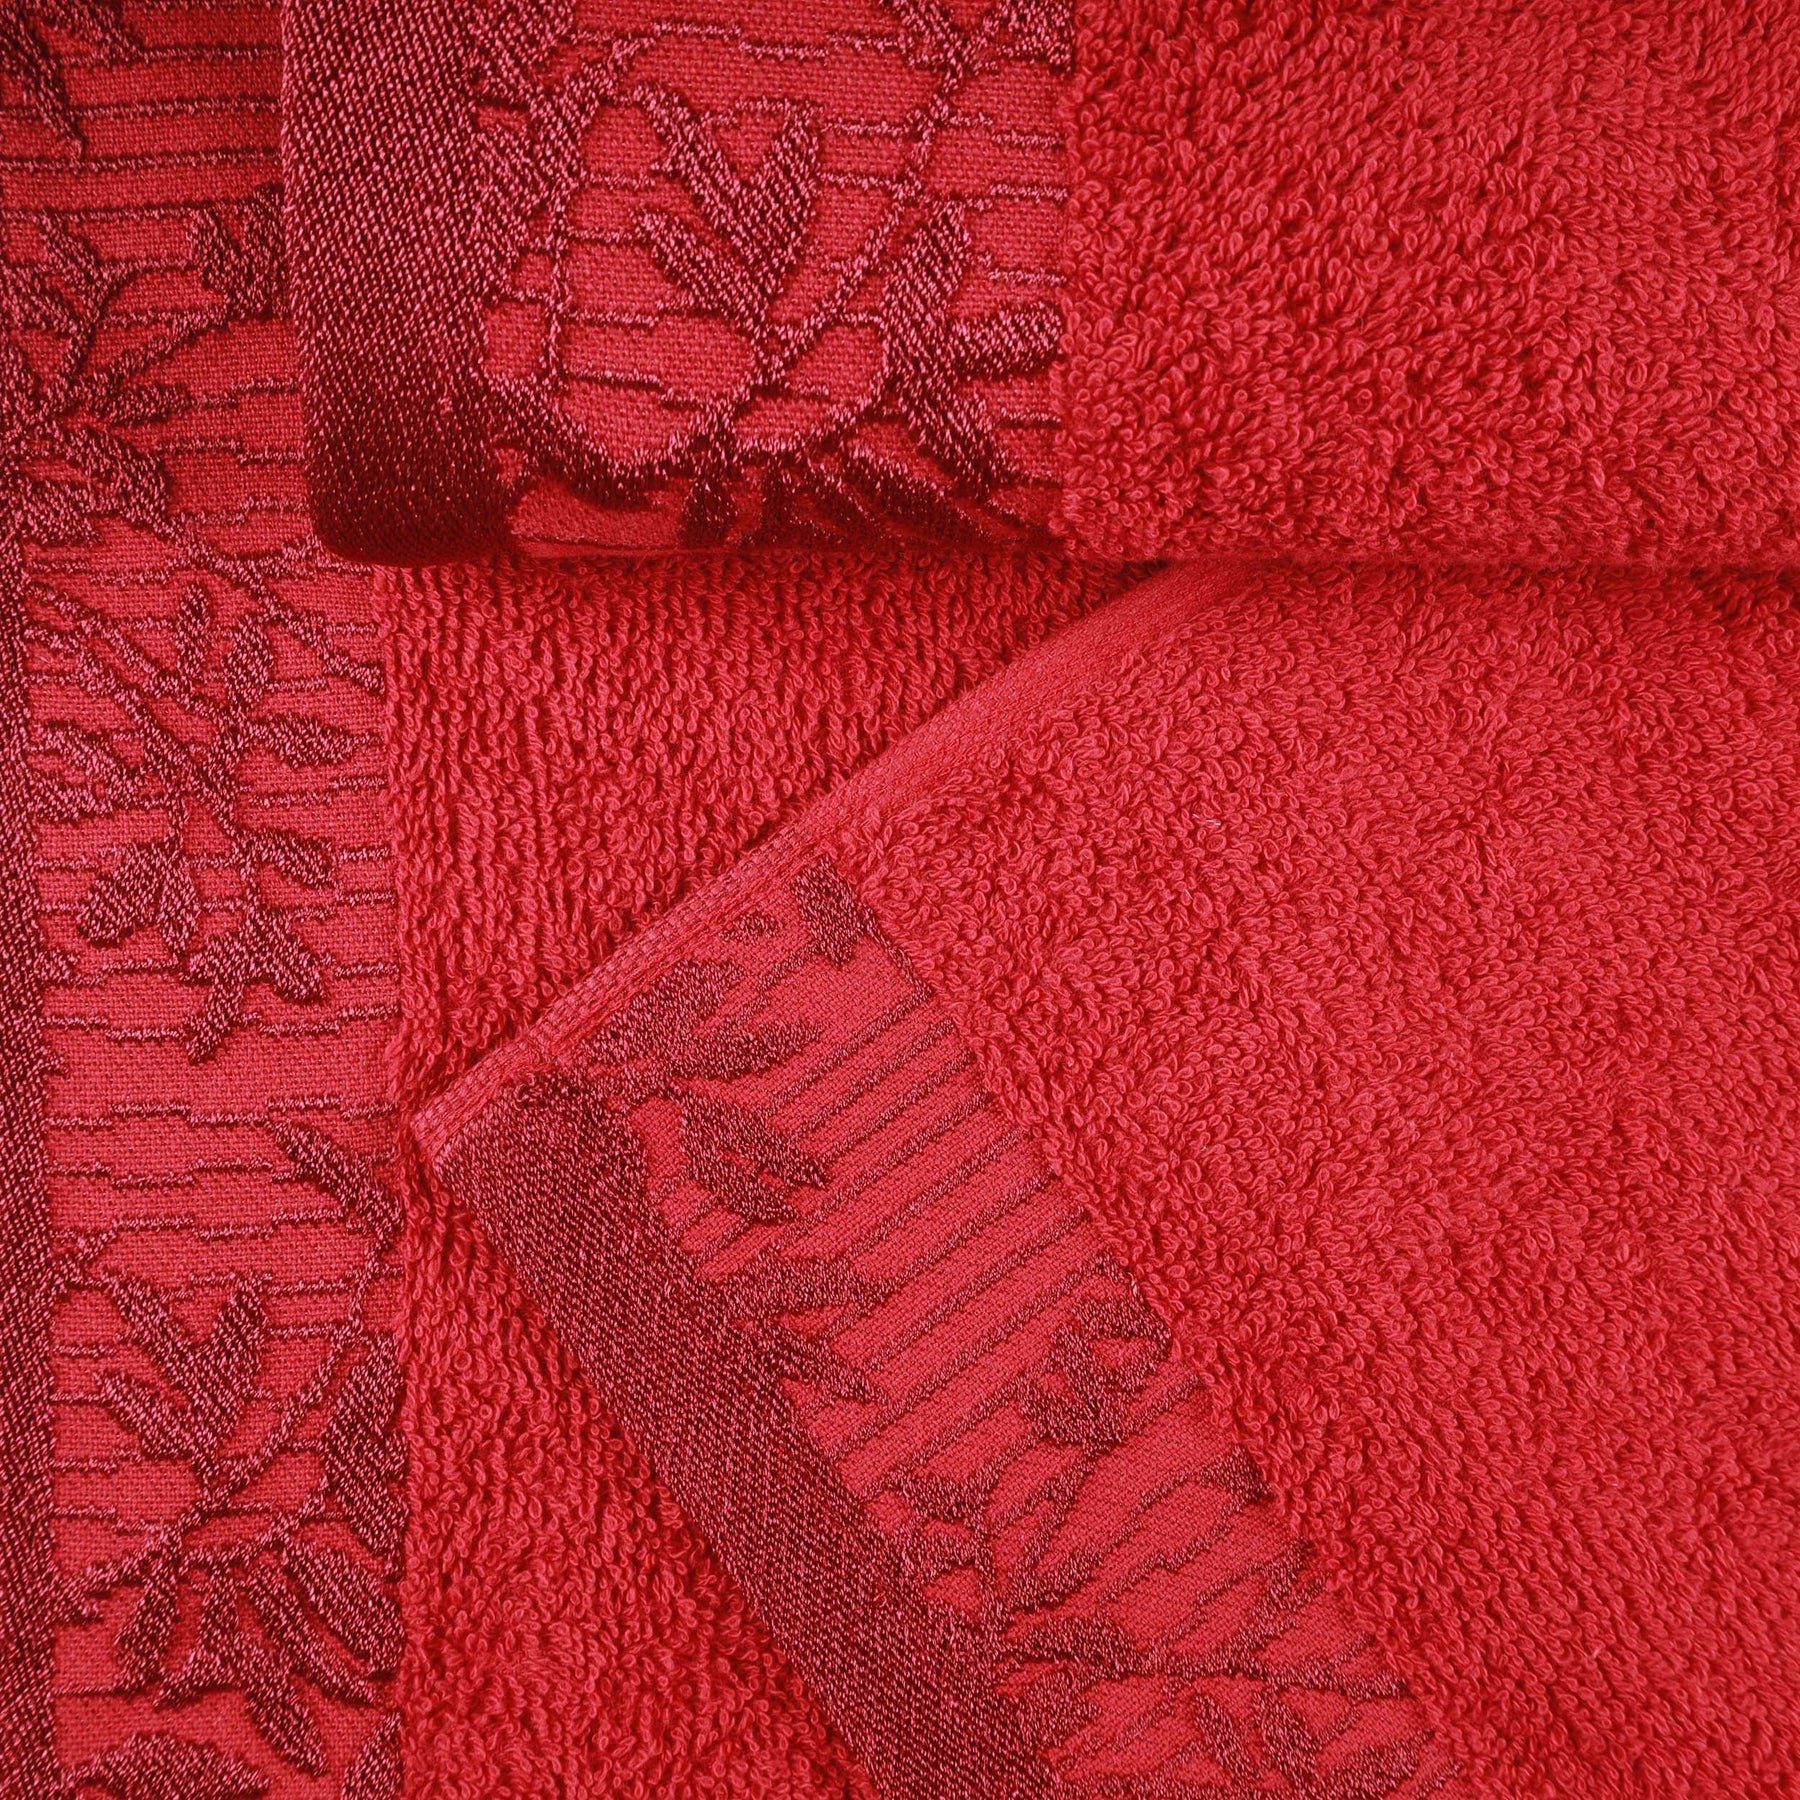 Wisteria Cotton Floral Embroidered Jacquard Border Bath Towel - Garnet